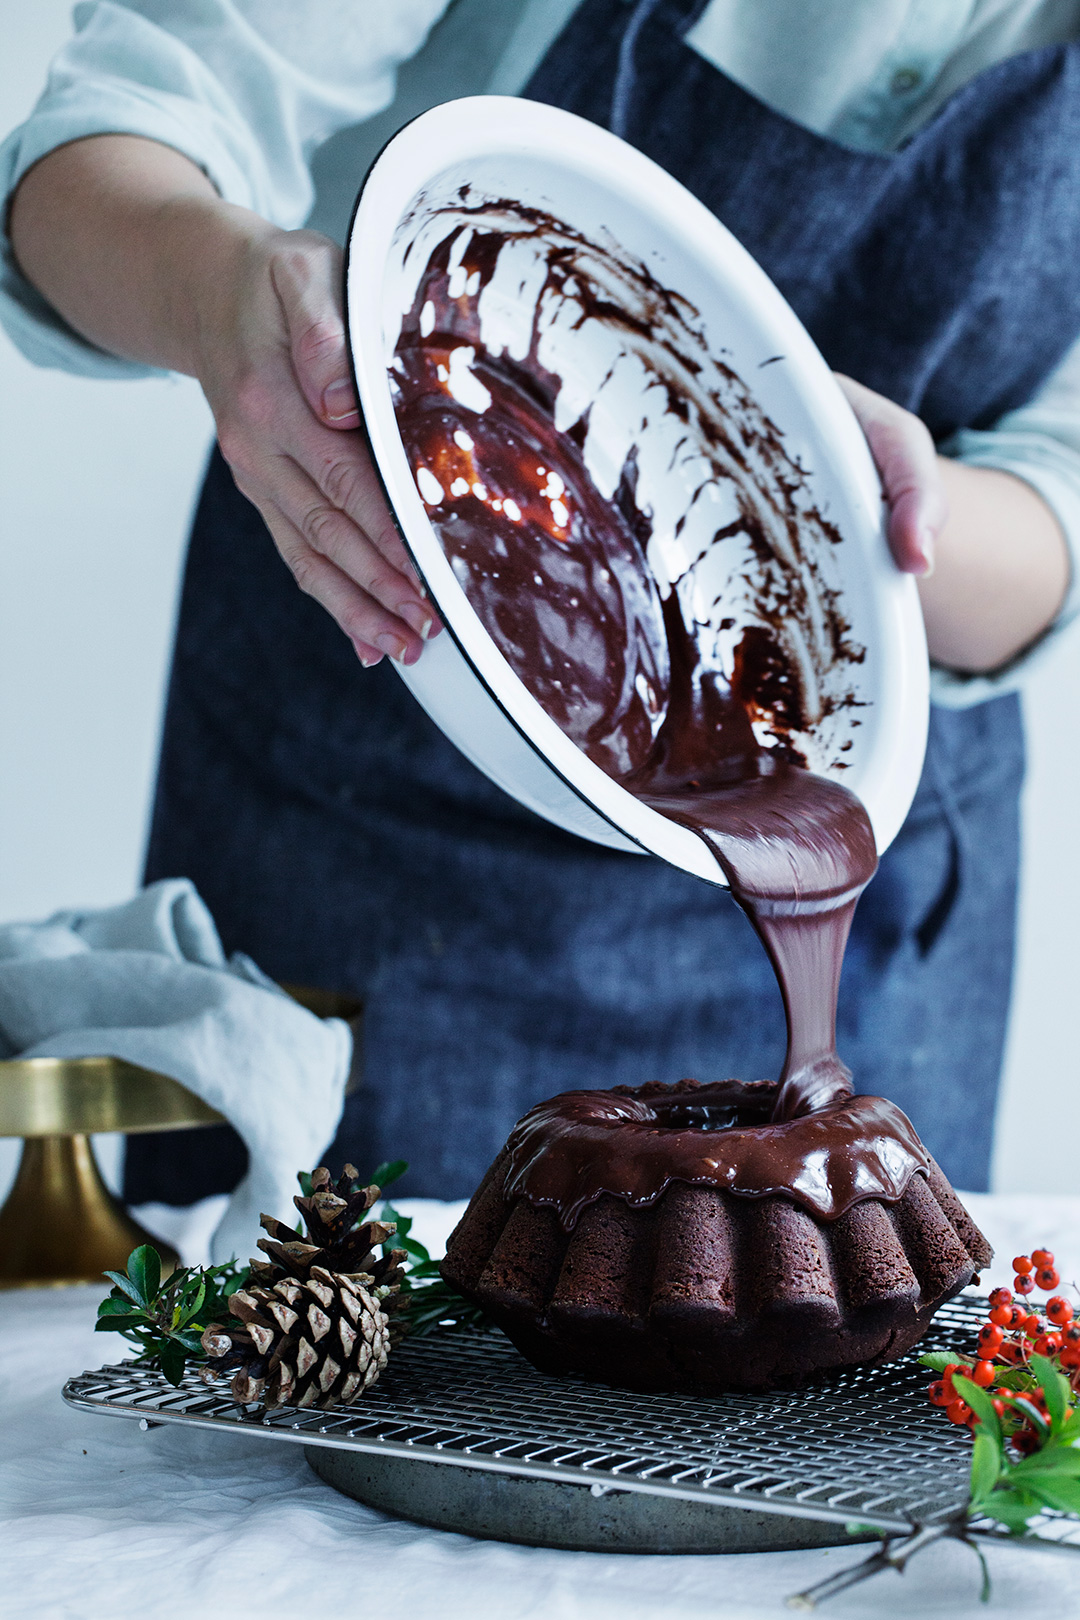 Chocolate Rosemary Bundt Cake. Perfect Holiday Dessert! #modernwifestyle #foodphotography